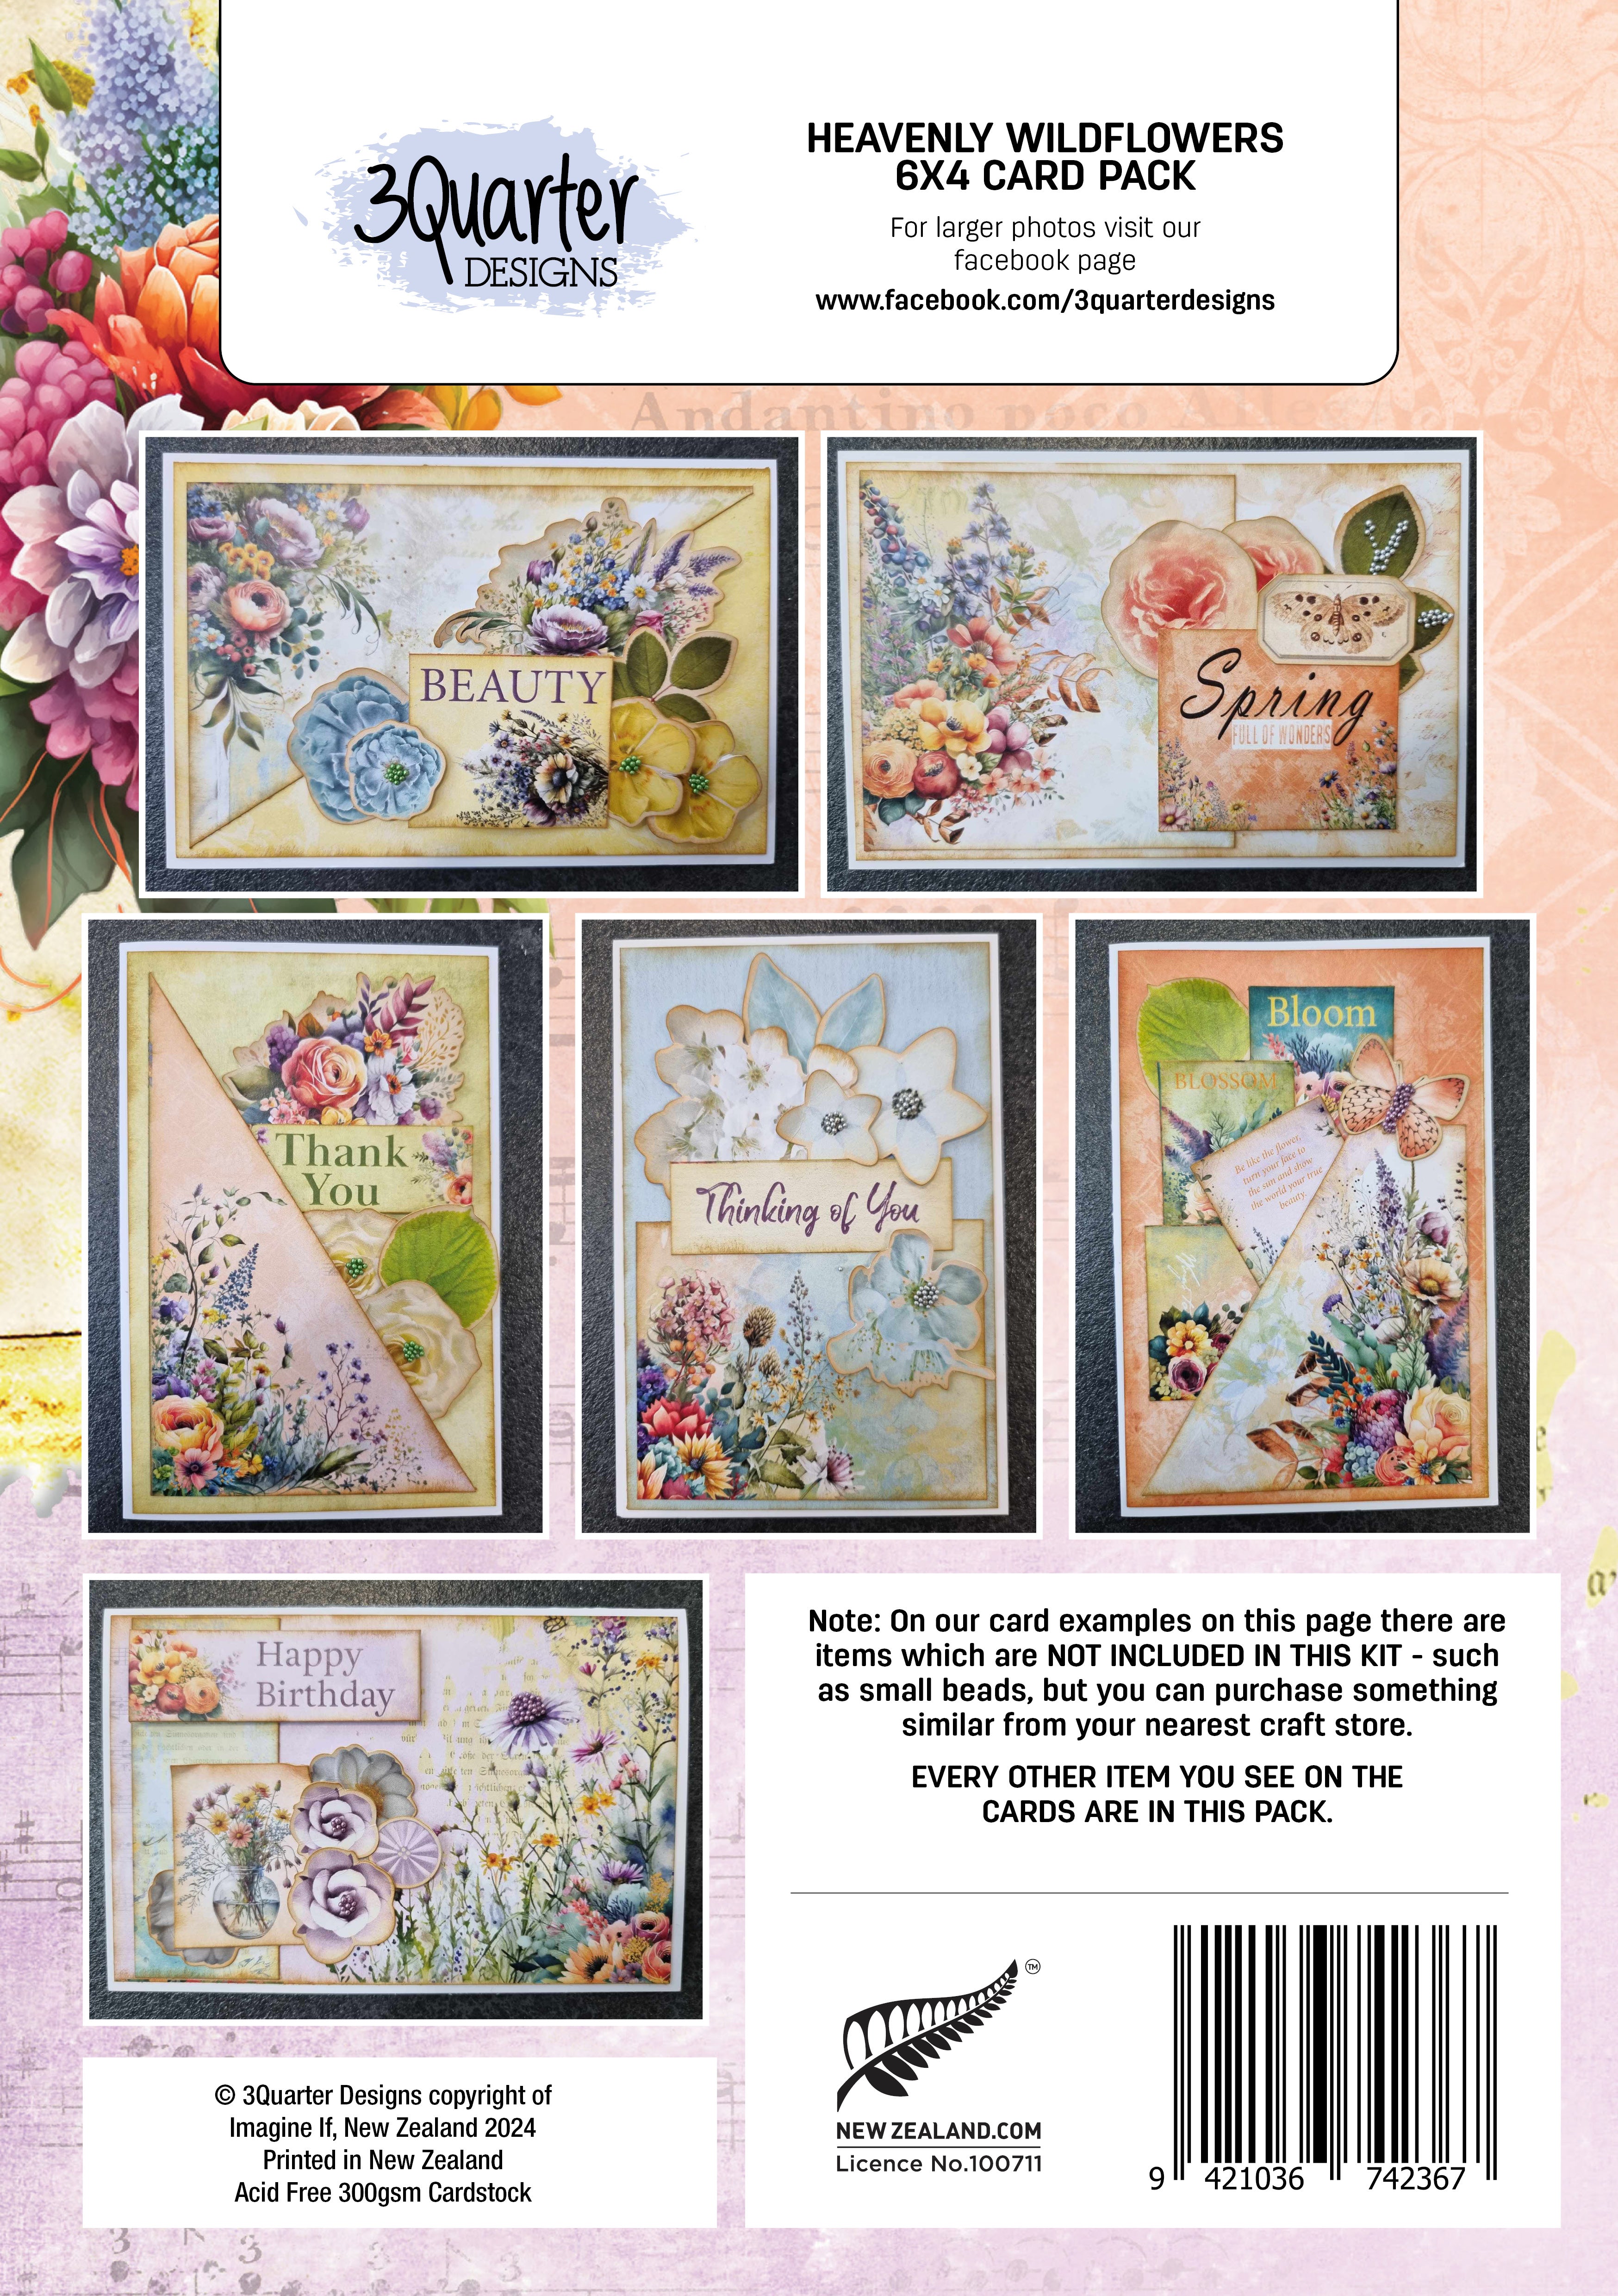 3Quarter Designs Heavenly Wildflowers 6x4 Card Pack